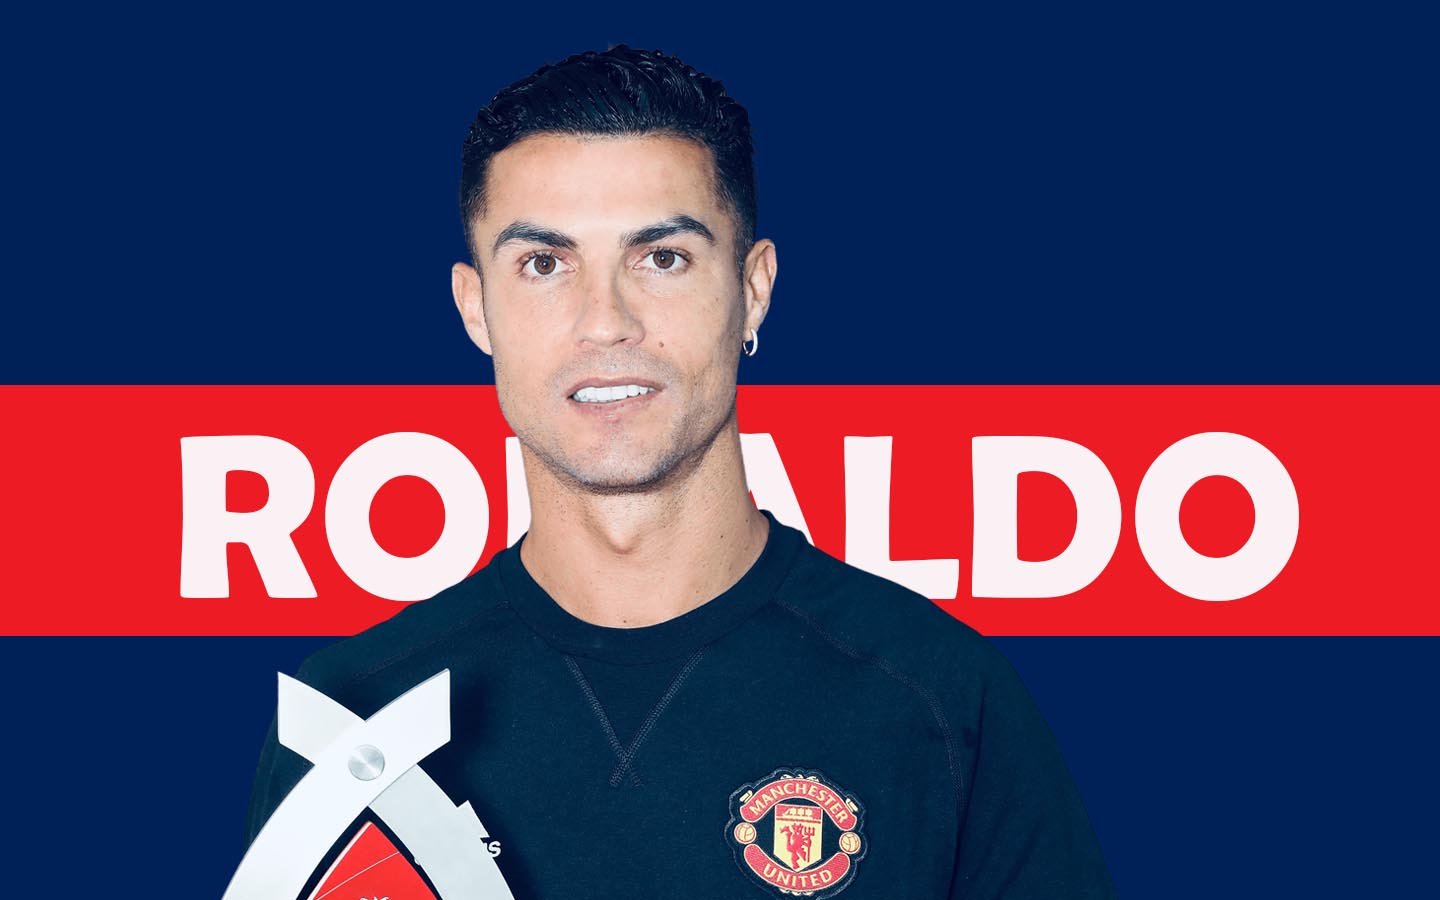 Ronaldo Minta Maaf, MU Tercecer di Urutan 7